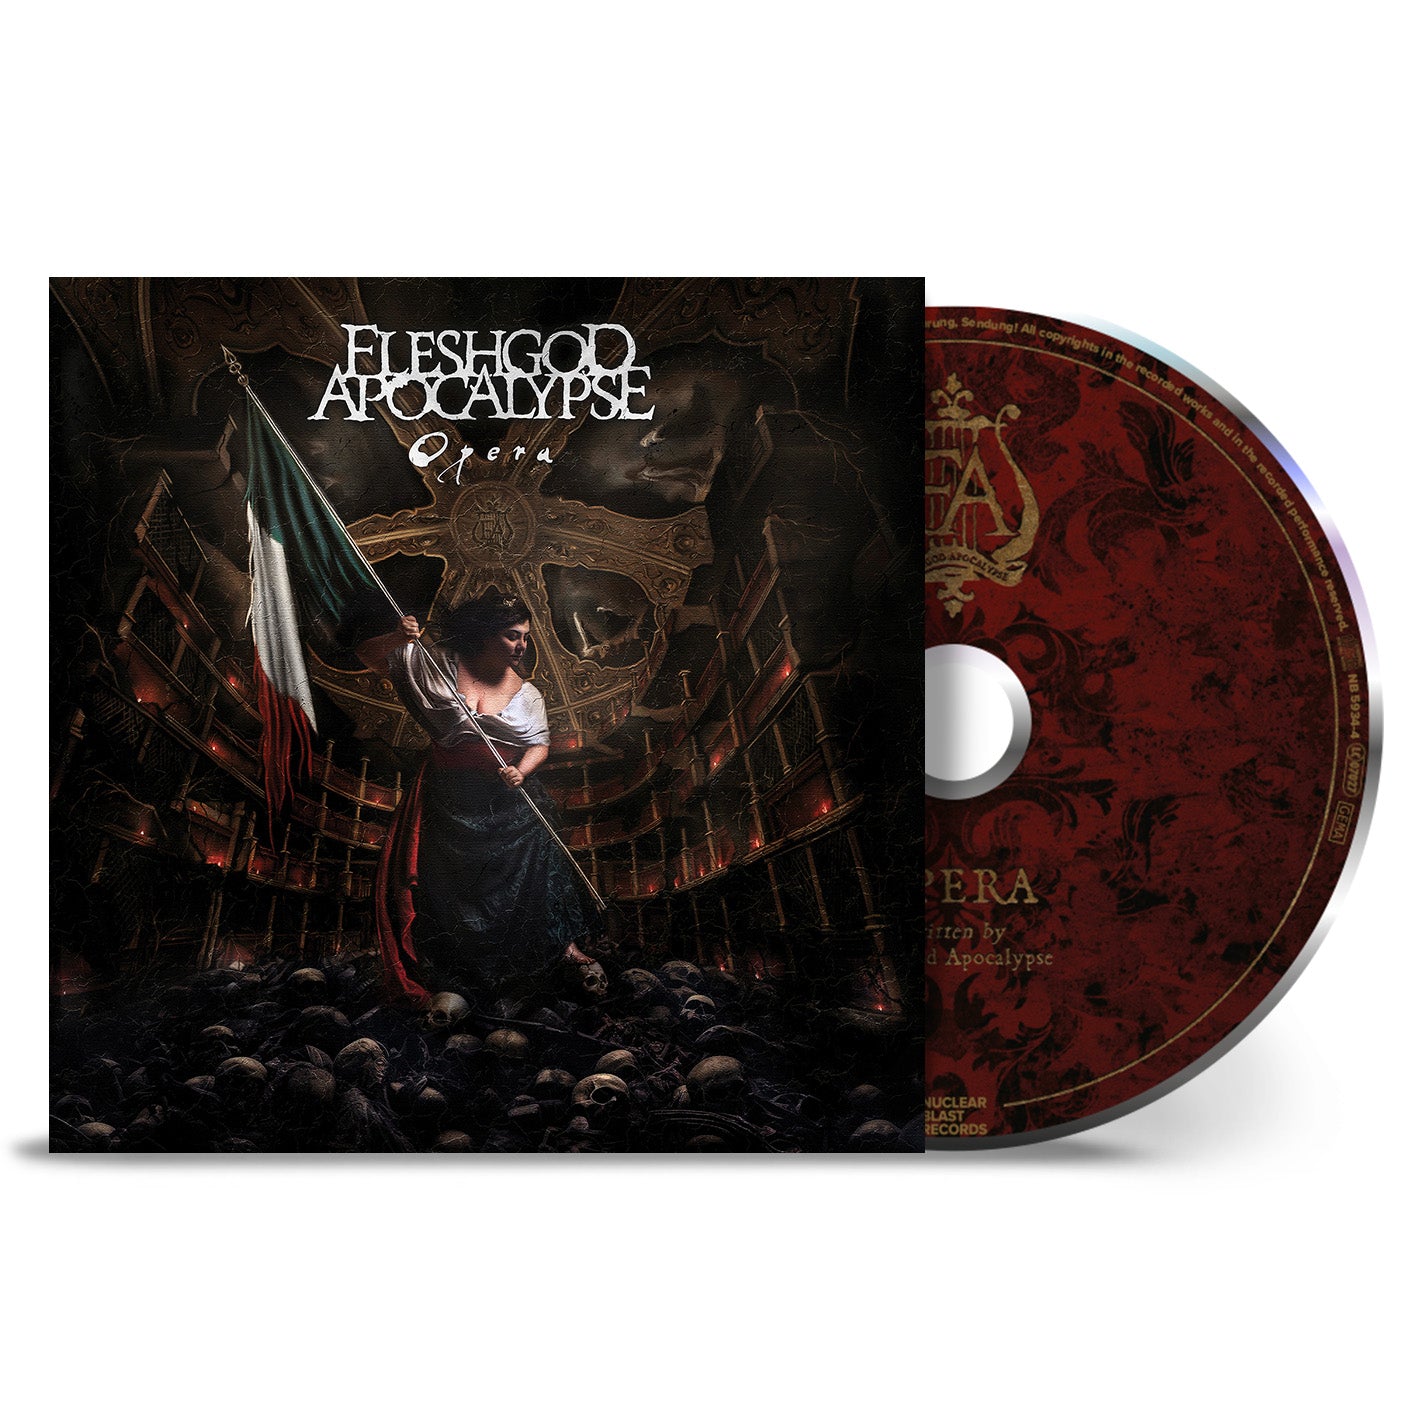 Fleshgod Apocalypse "Opera" CD - PRE-ORDER